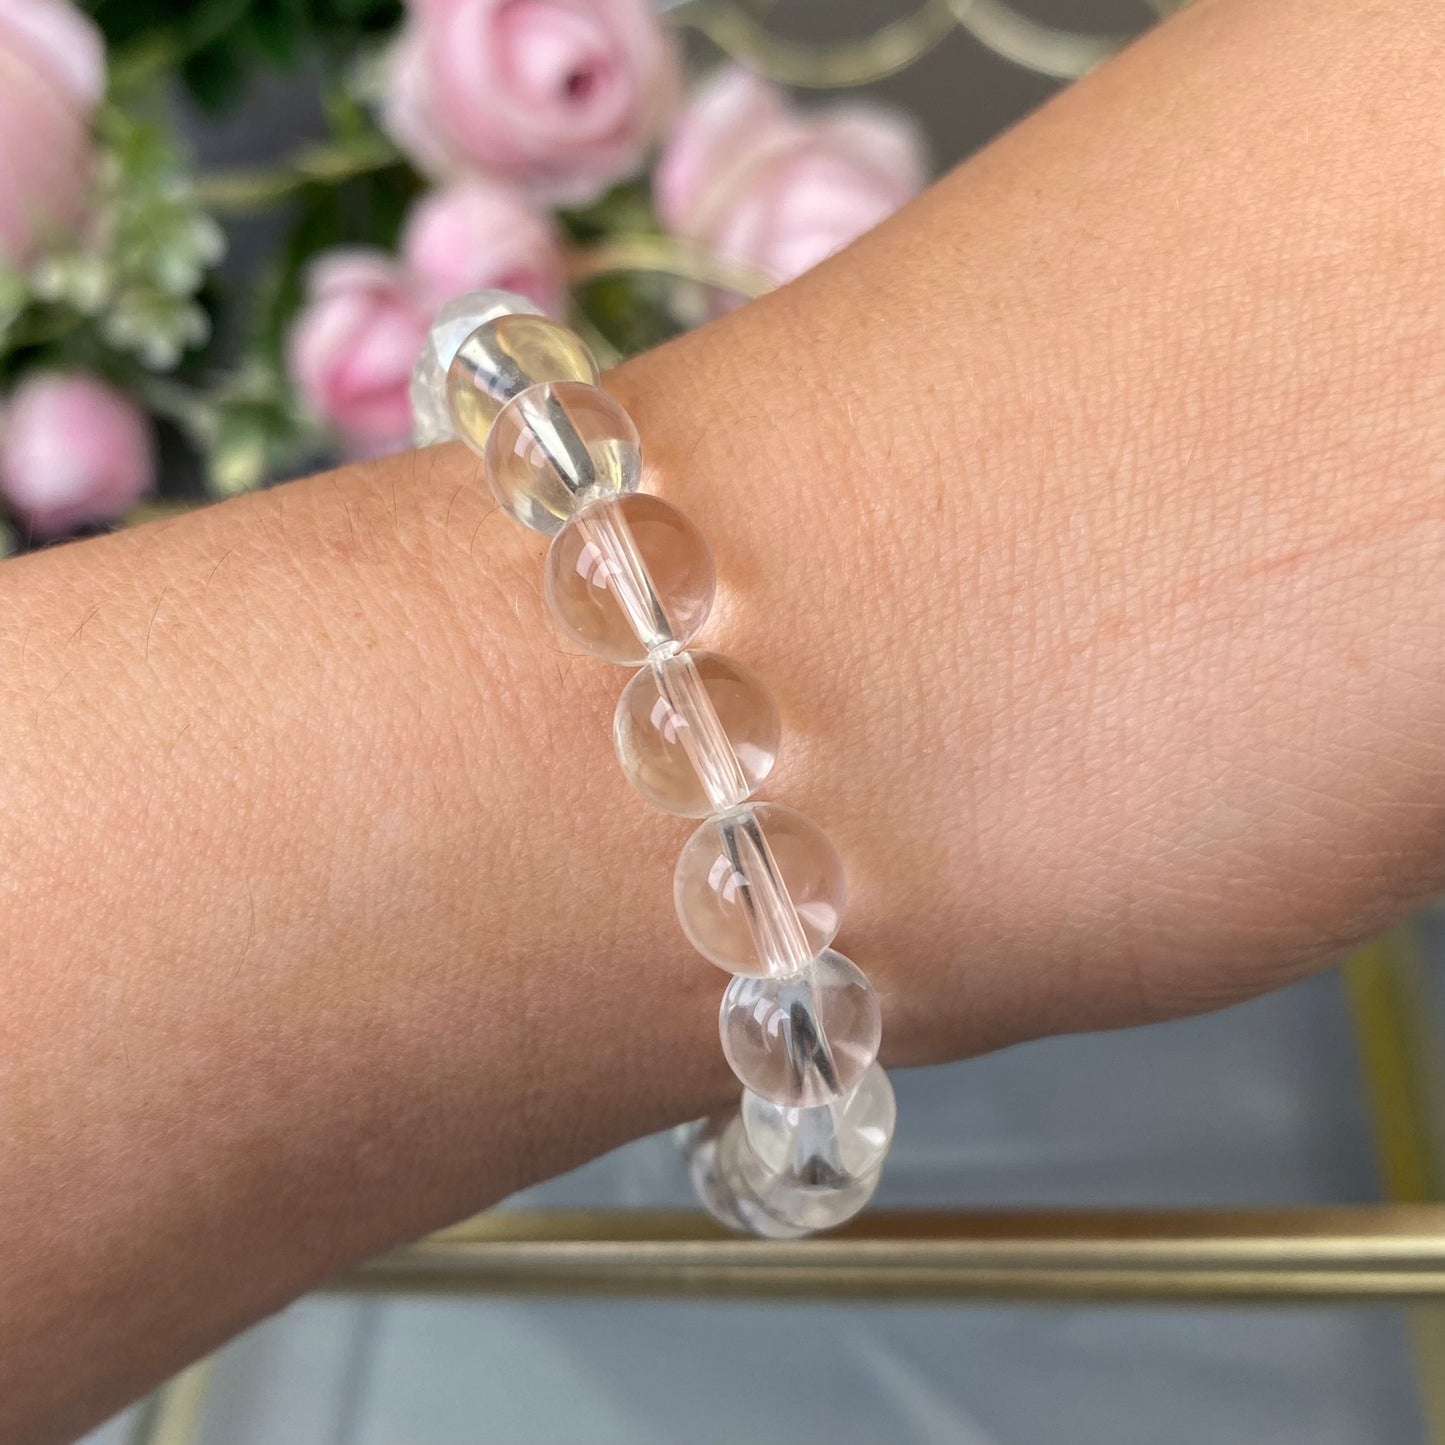 Clear Quartz bracelet with decorative crystals (Clear Quartz, 8mm)